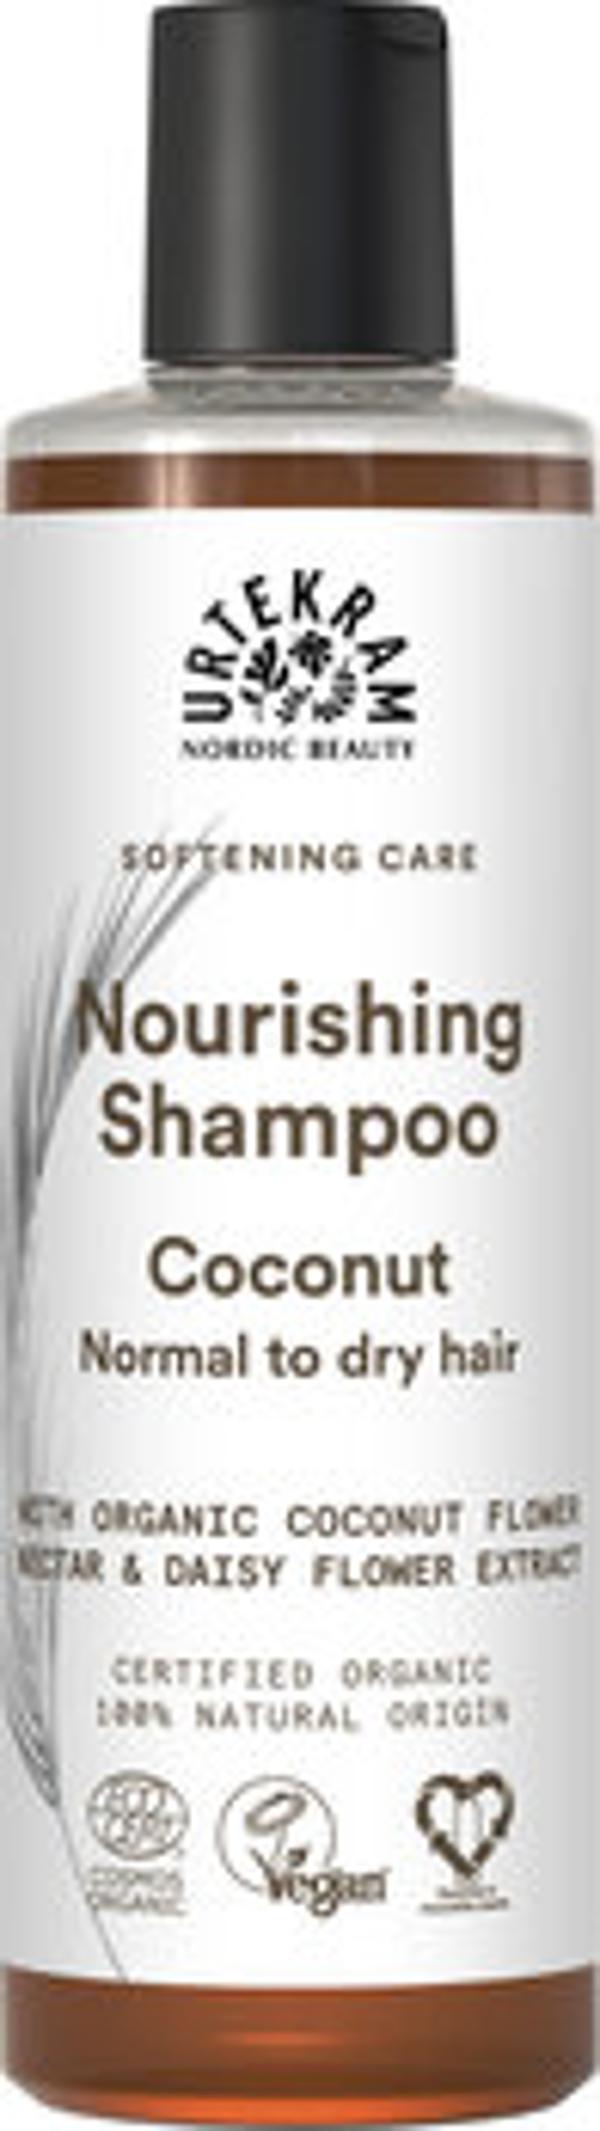 Produktfoto zu Kokos Shampoo 250ml